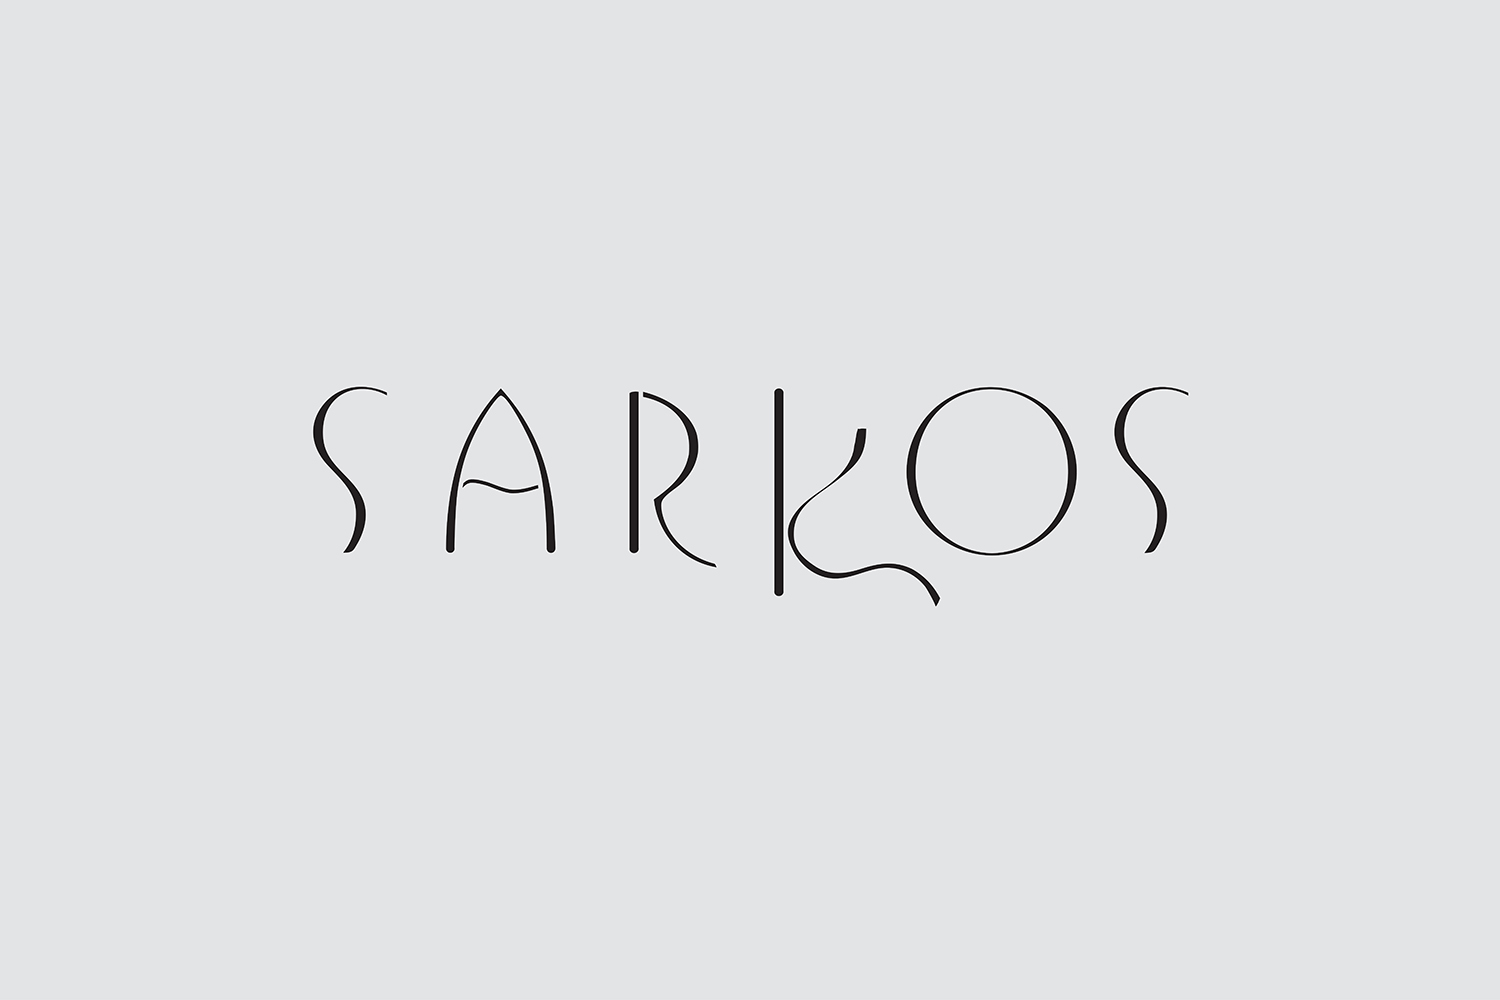 HW Web-Sarkos-logo-01.jpg